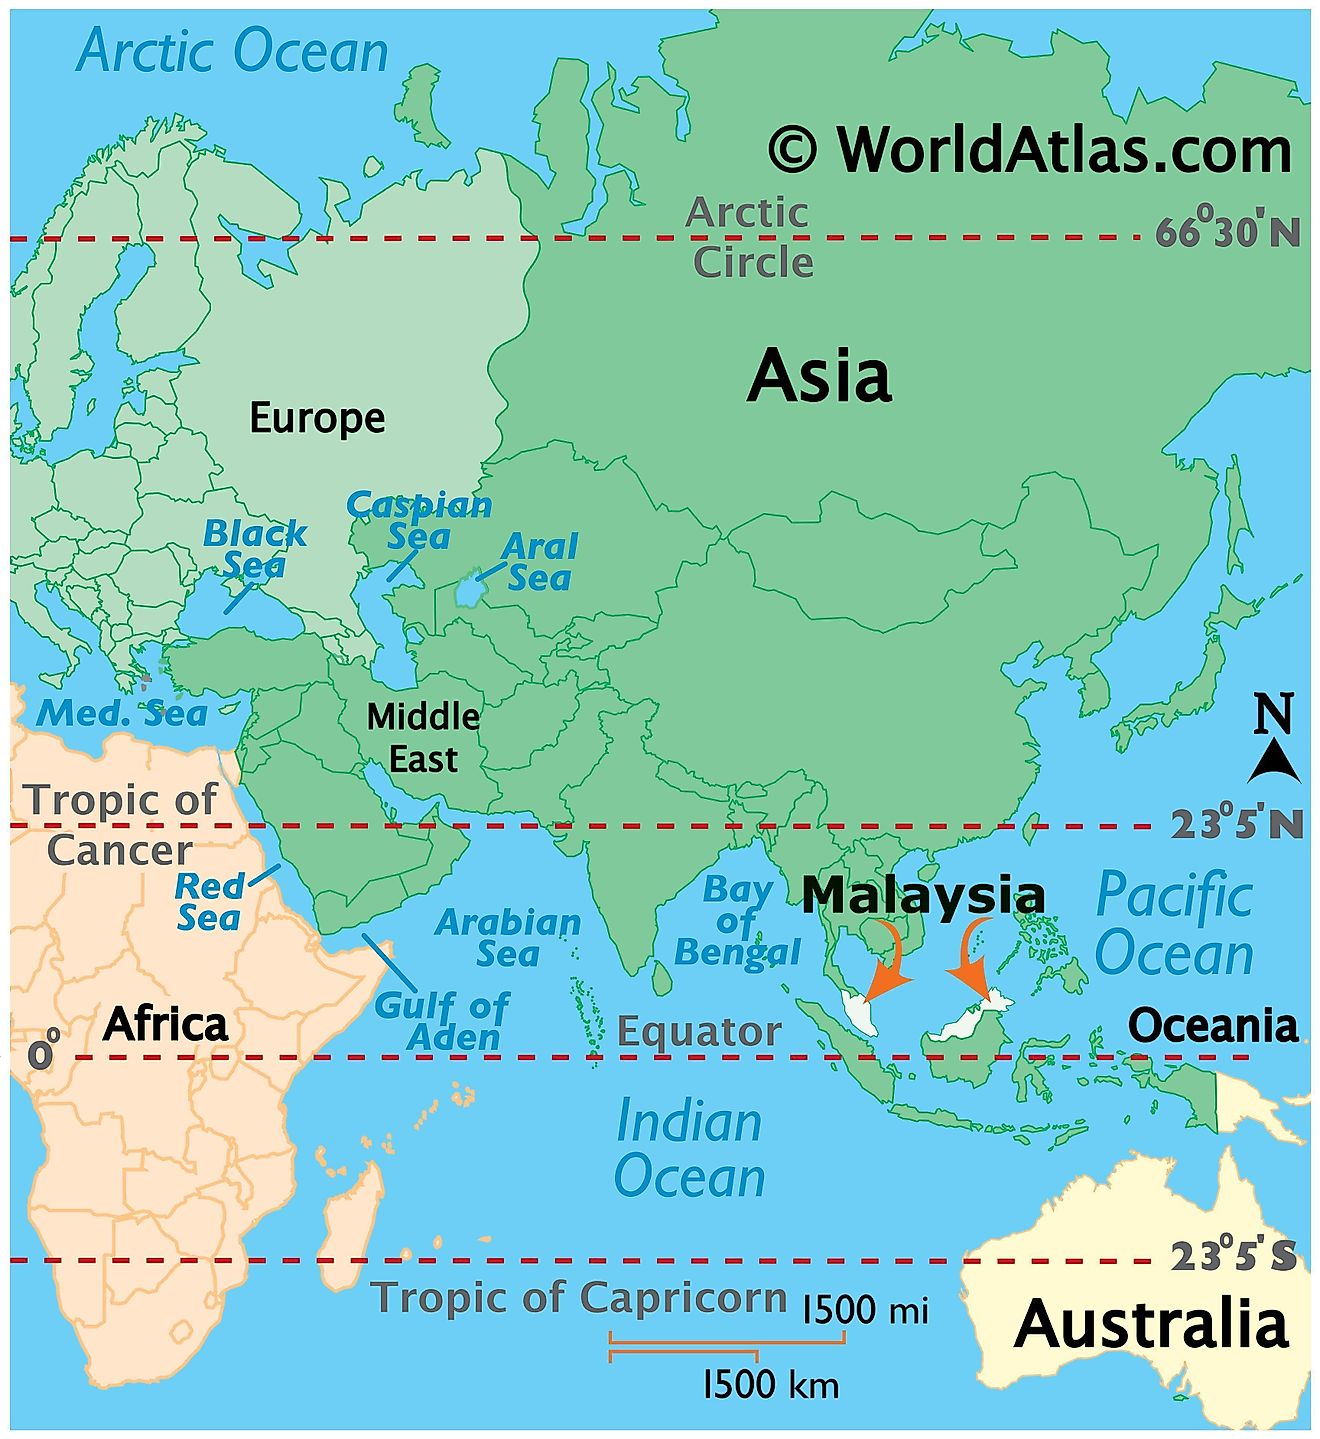 Malaysia Maps & Facts - World Atlas